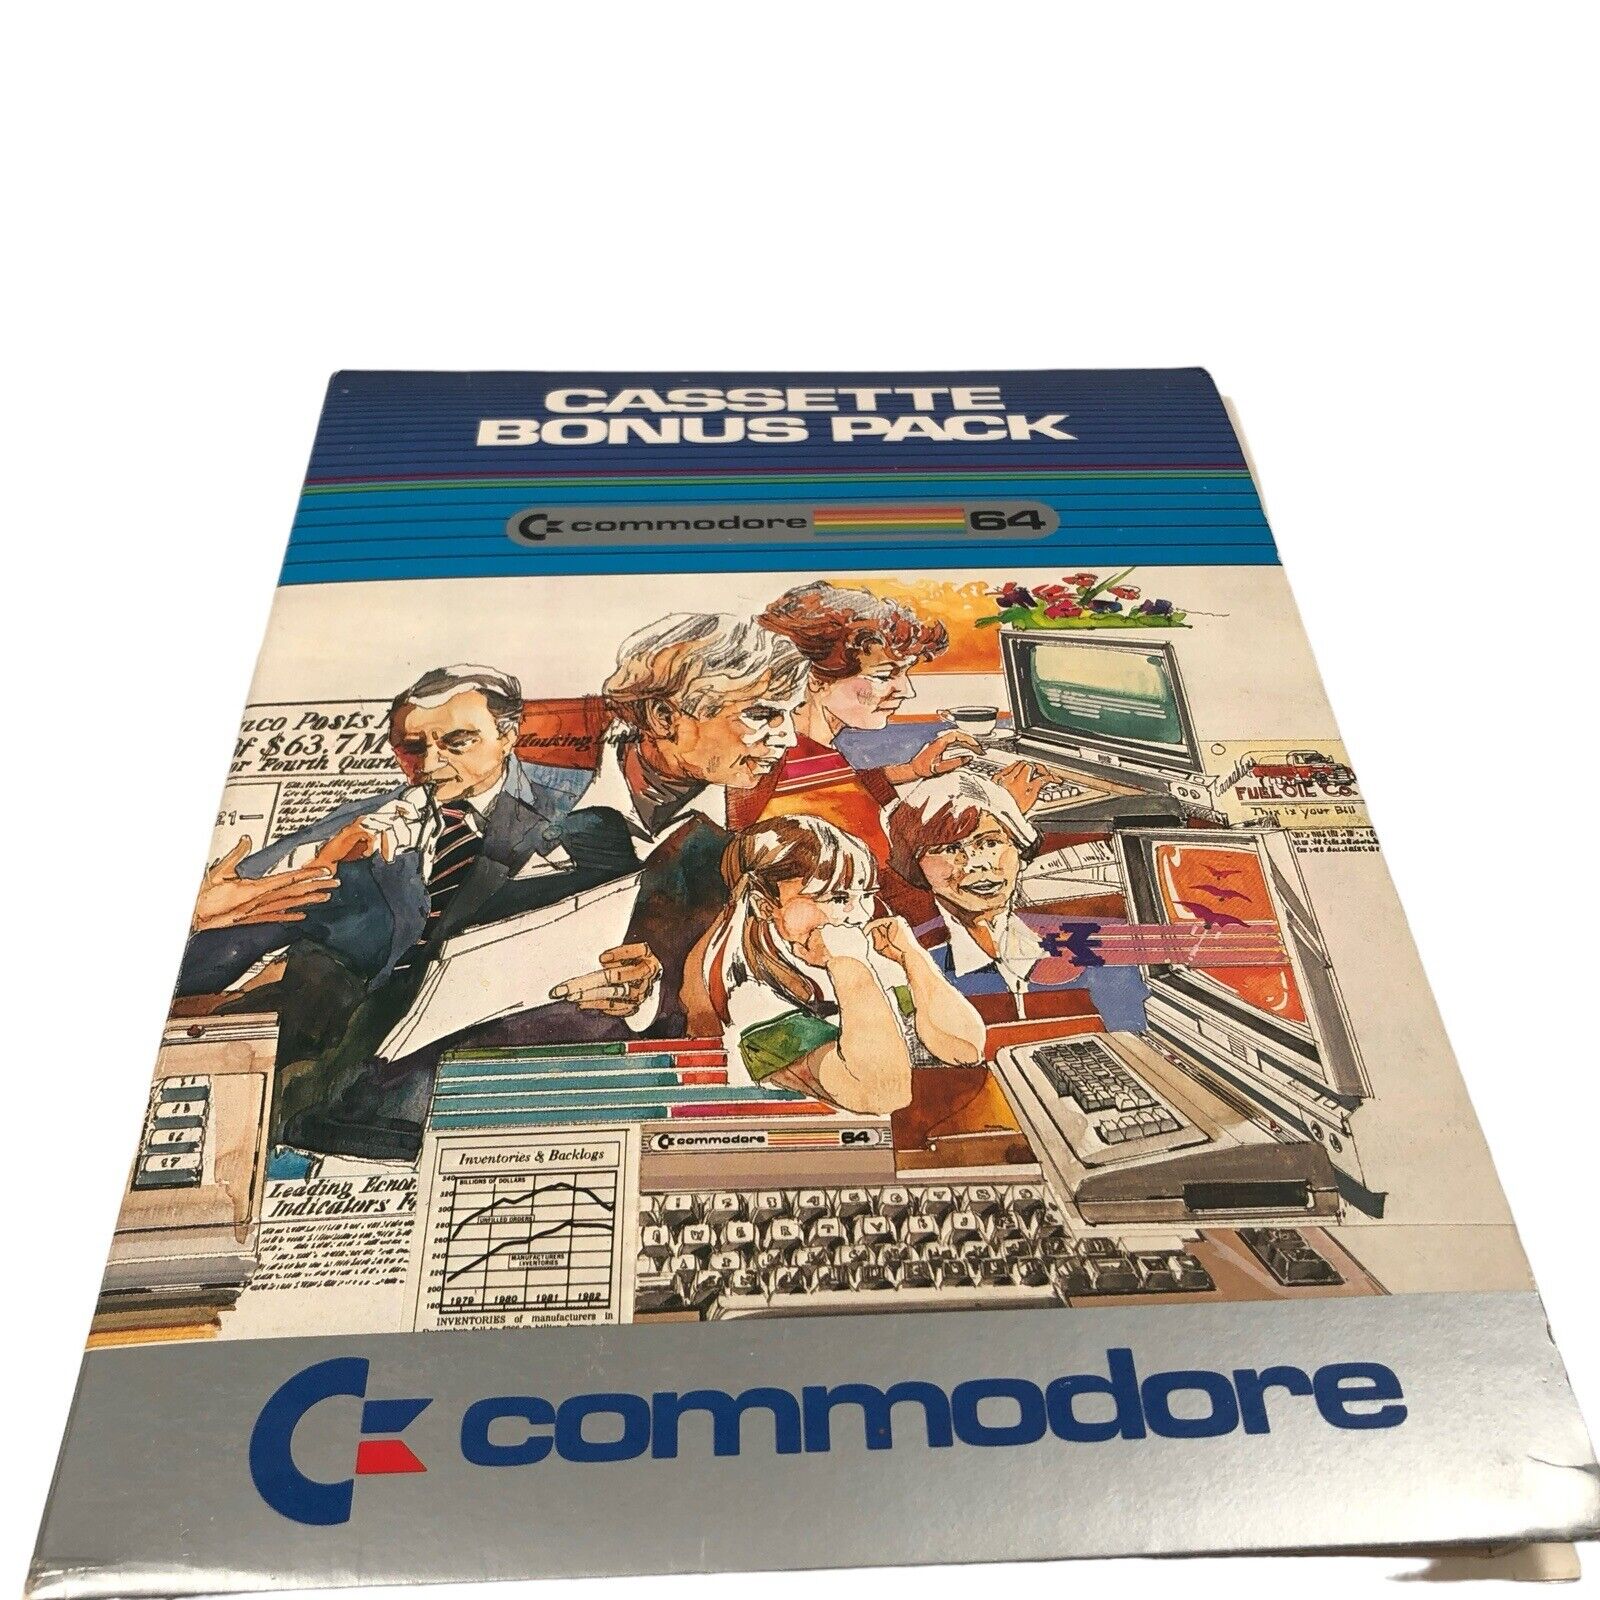 Cassette Bonus Pack Commodore 64 Software On Tapes C64 1983 Vintage Computing